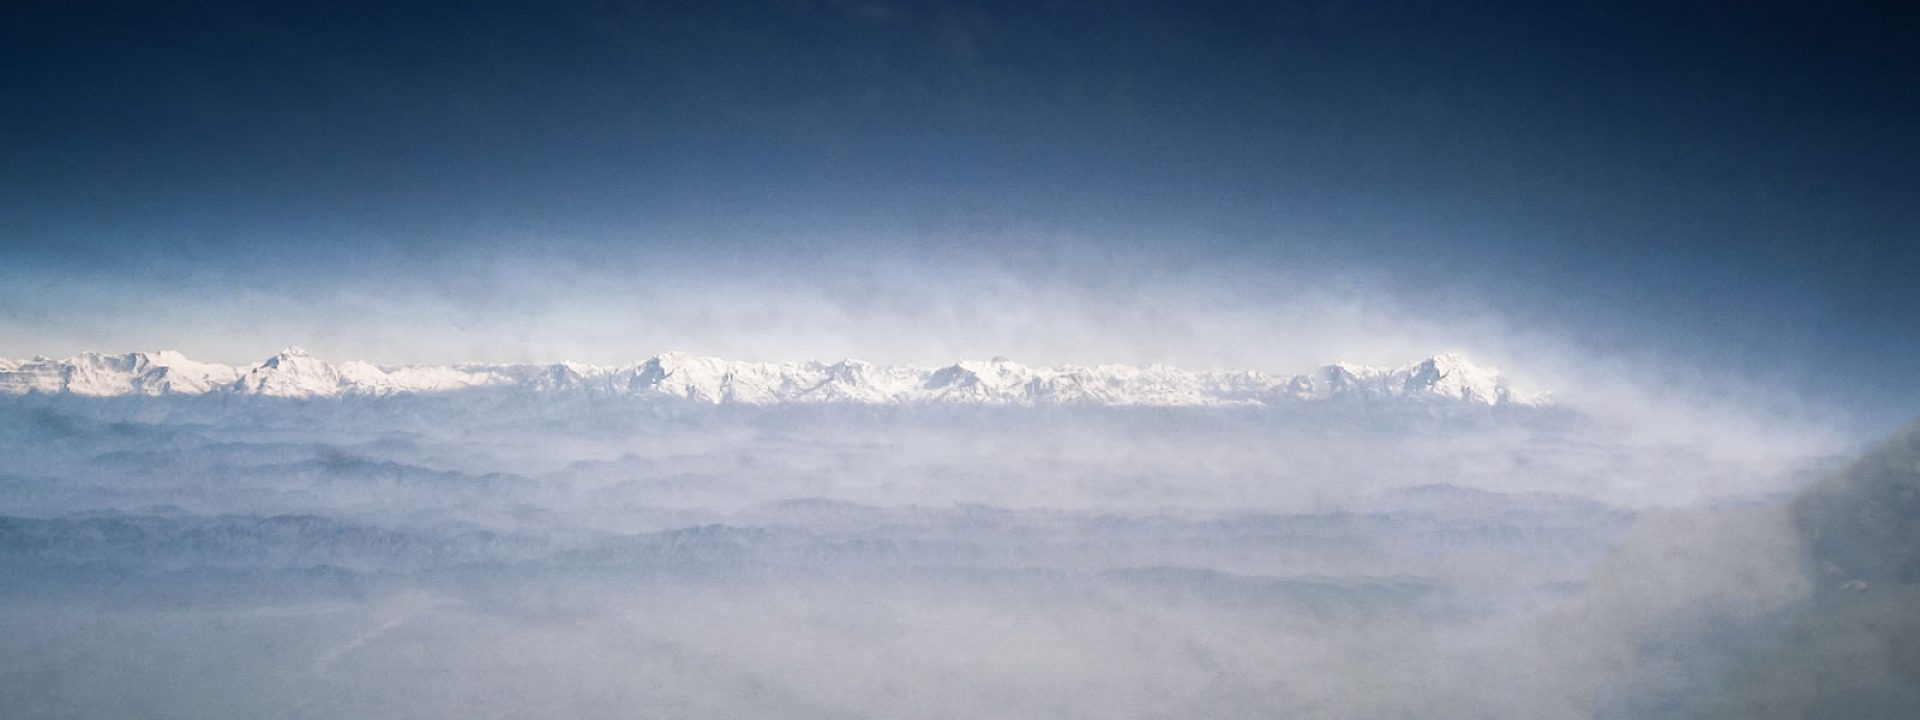 The Himalayan ice is not far away